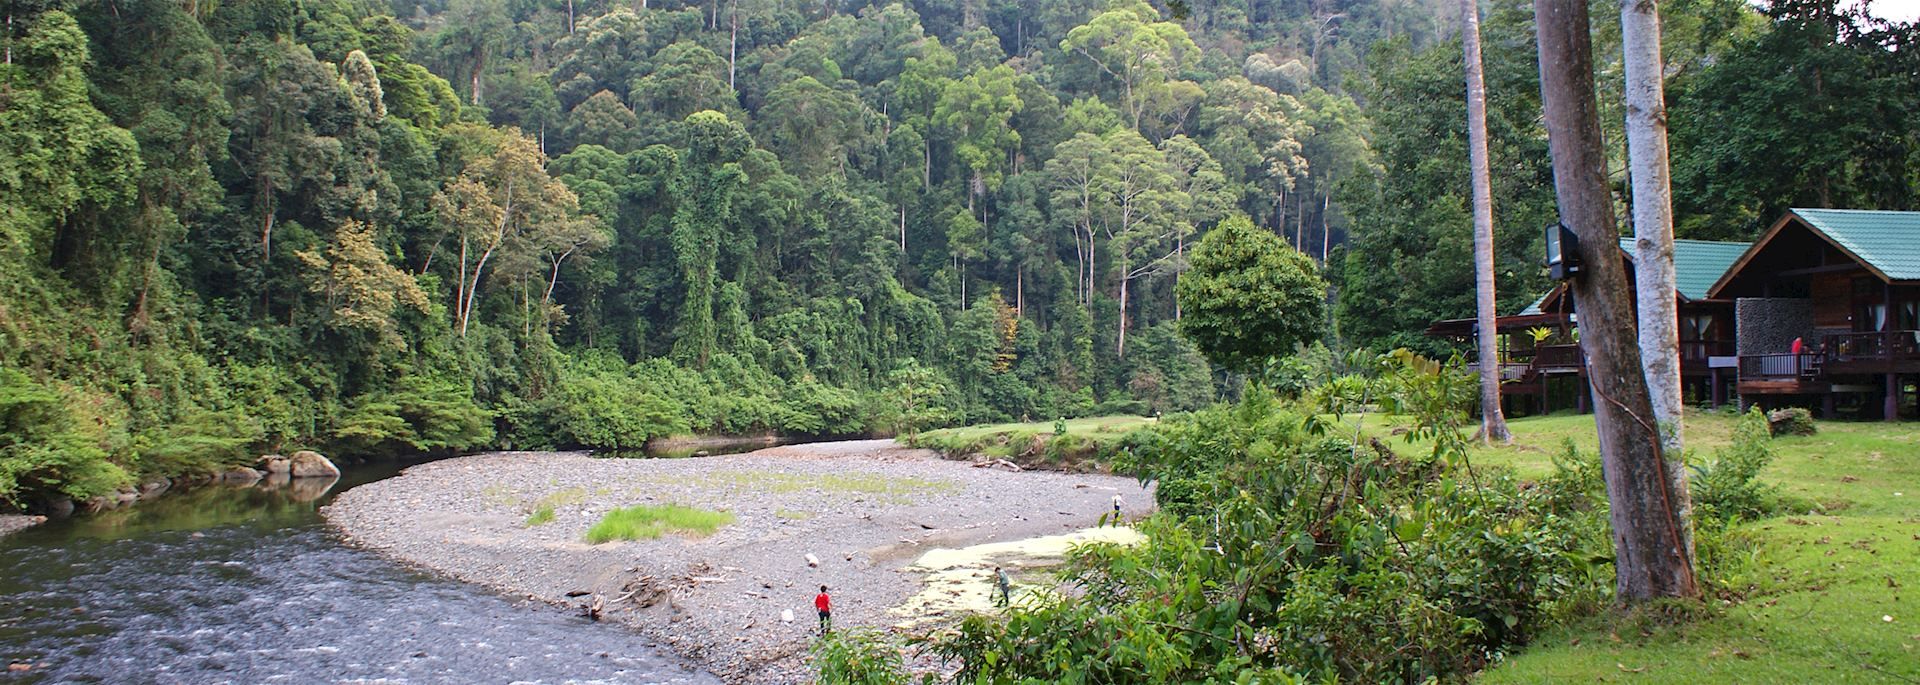 Borneo Rainforest Lodge in the Danum Valley